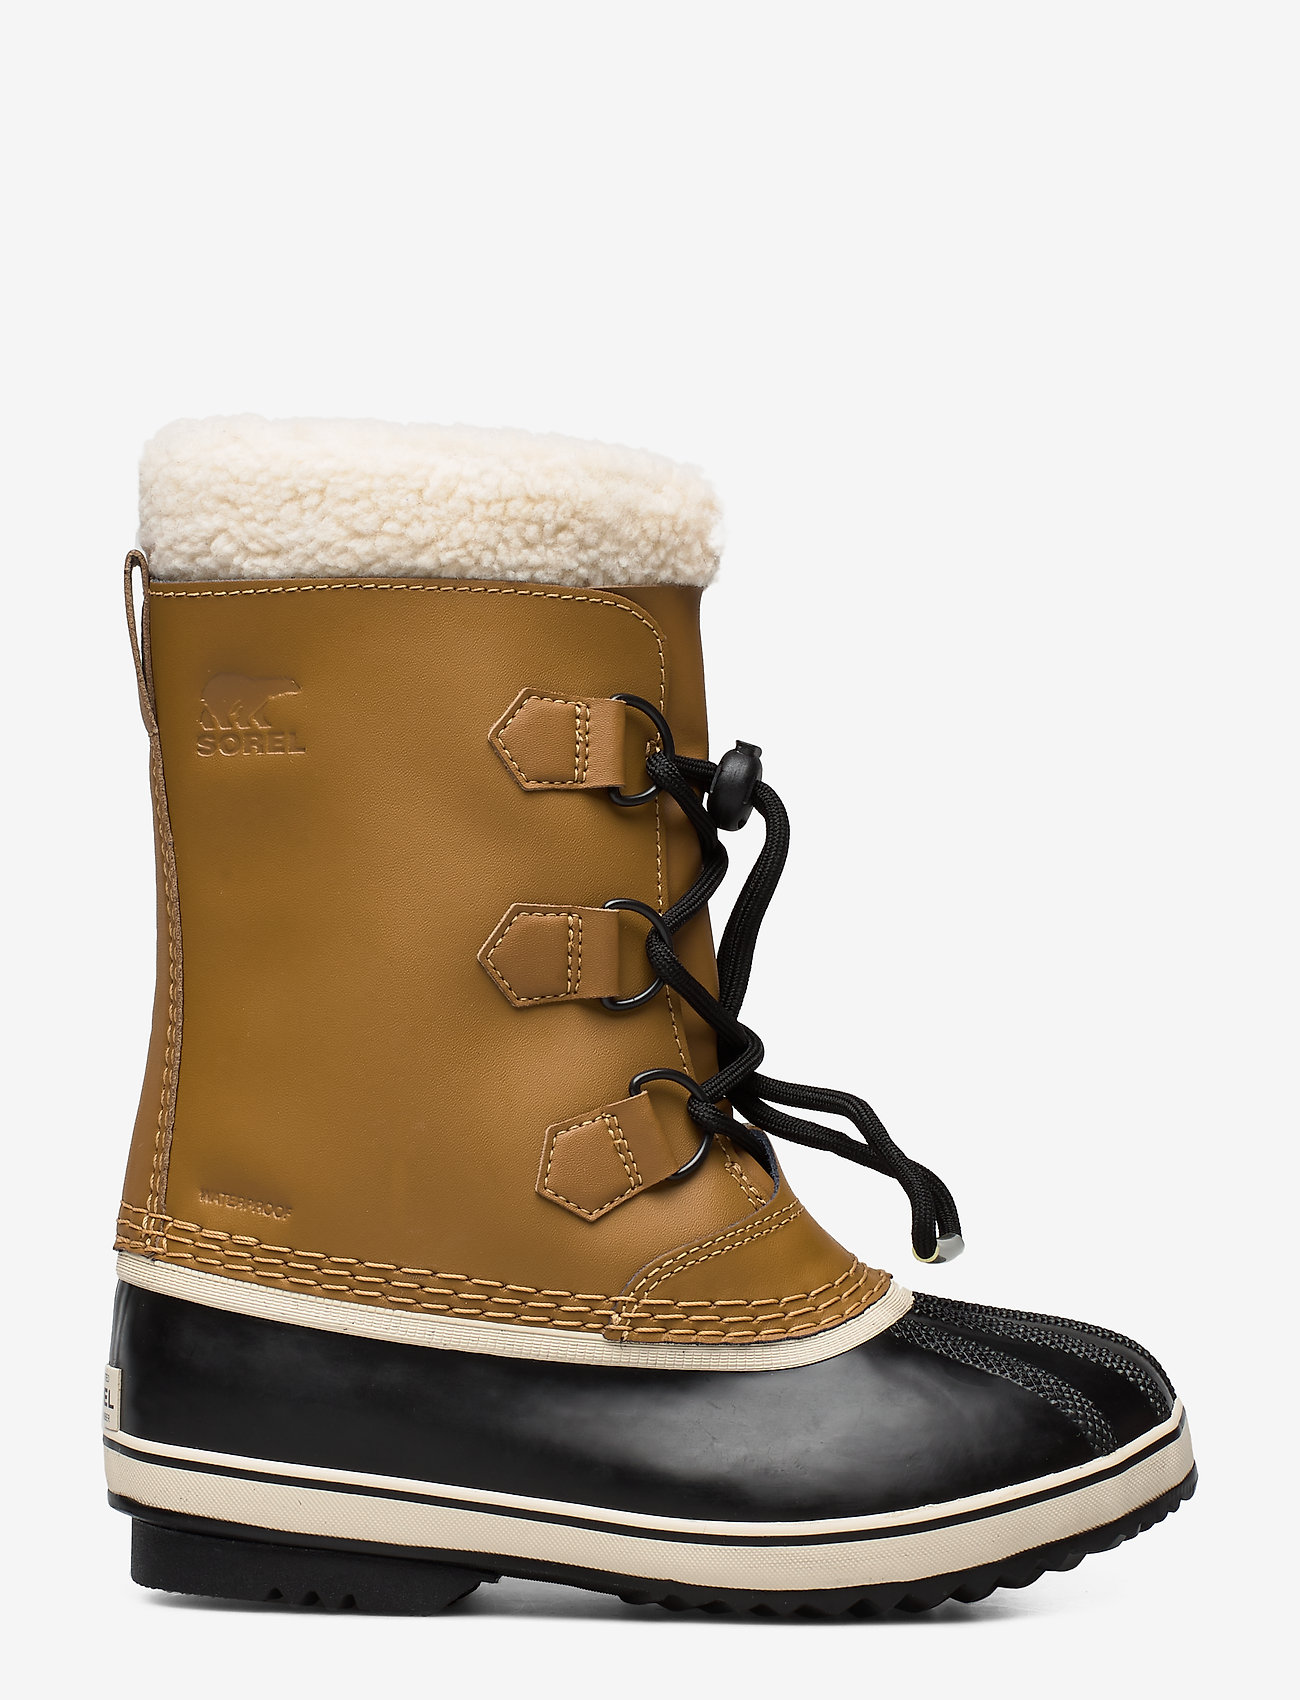 Sorel - YOOT PAC TP WP - winter boots - mesquite - 1